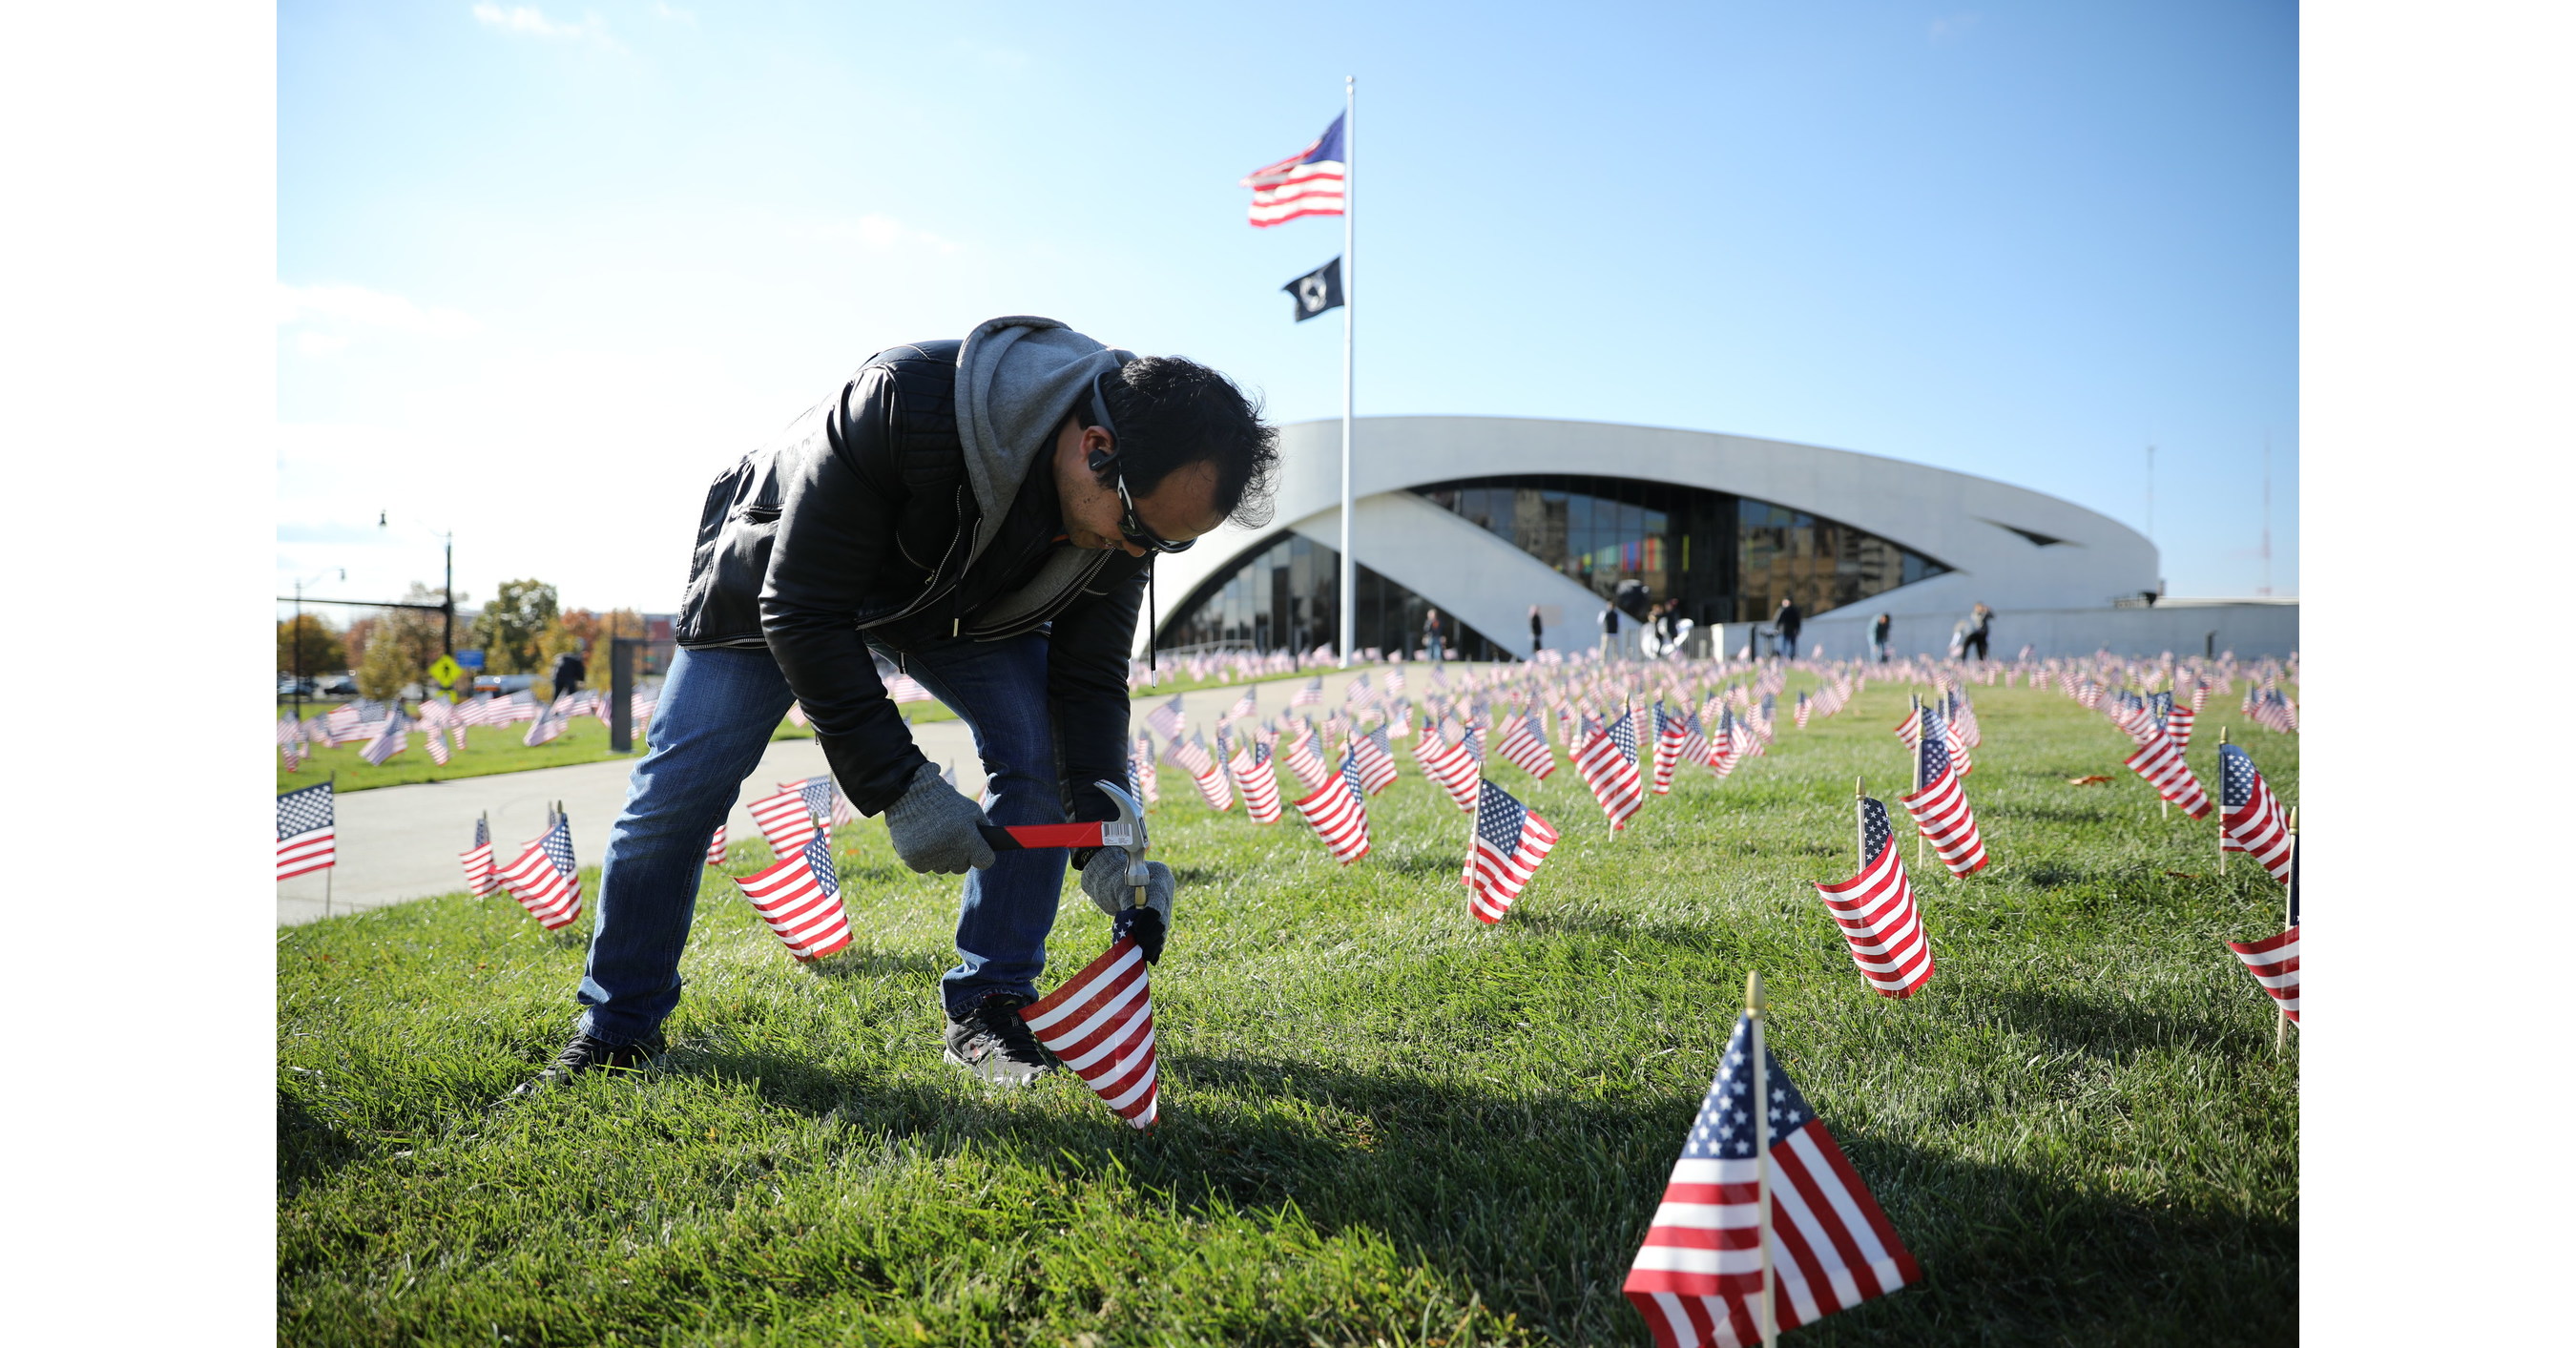 Big Lots raises funds for National Veterans Memorial and Museum in